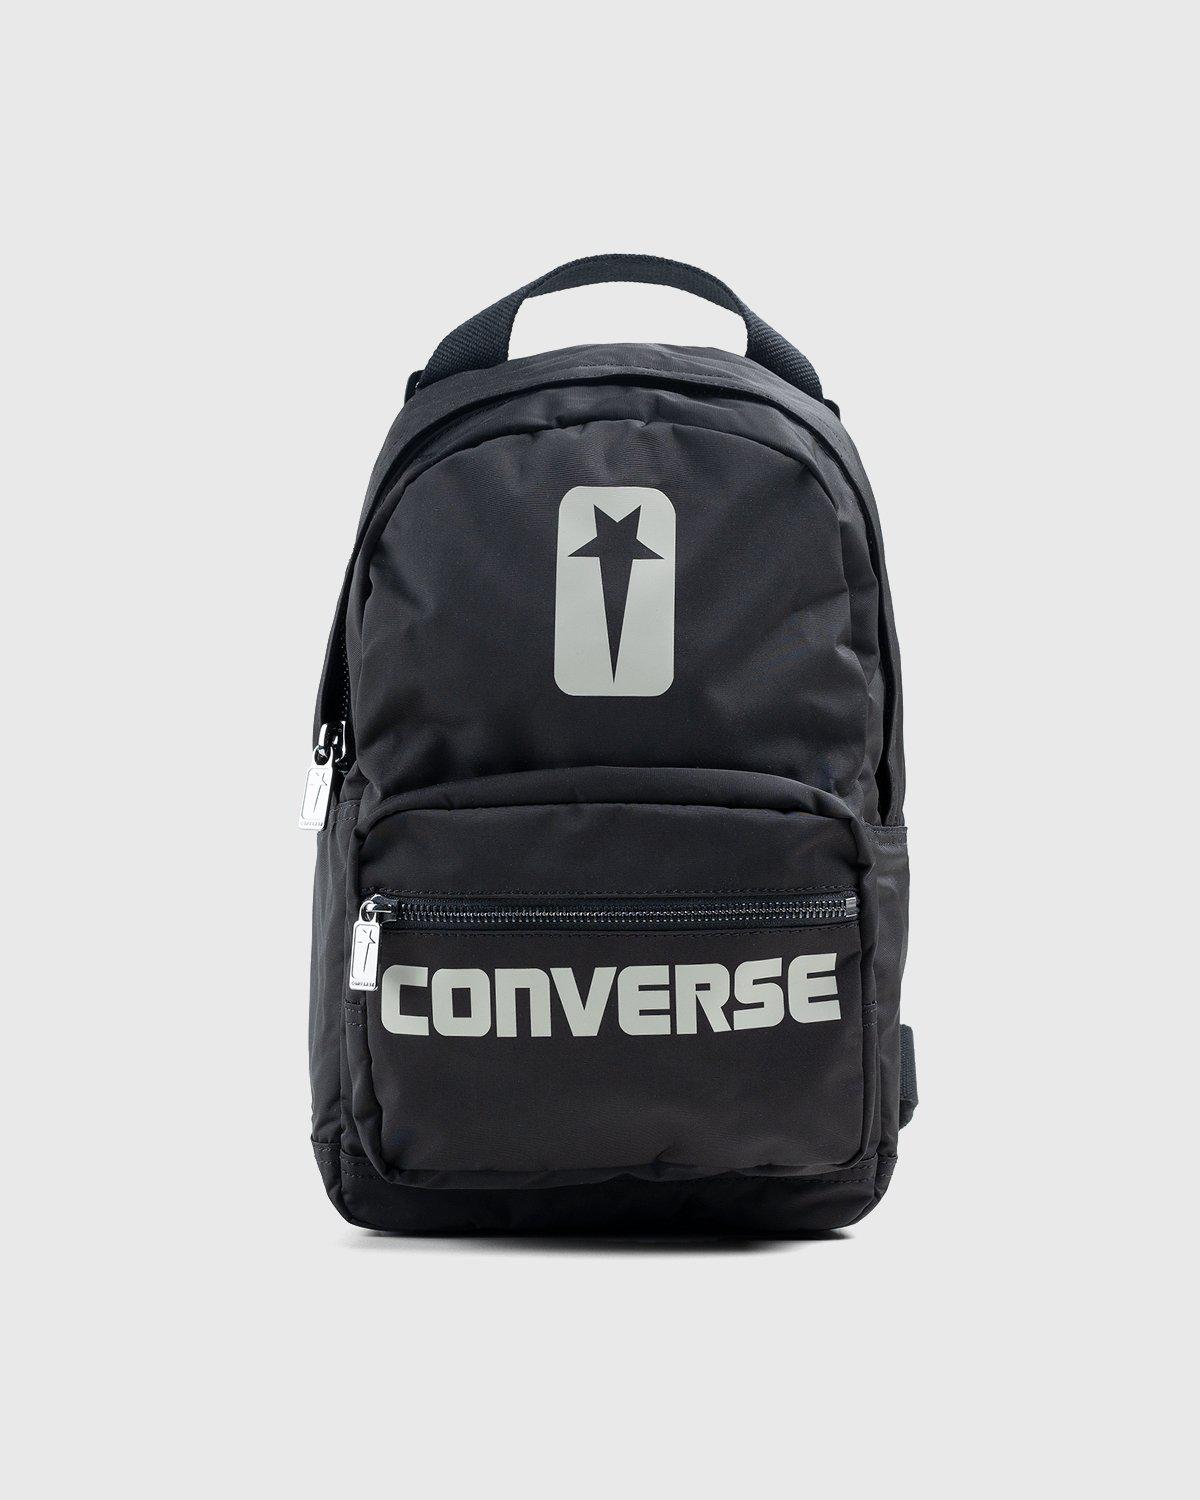 Converse x Rick Owens – DRKSHDW Backpack Black/Pelican by CONVERSE X RICK OWENS